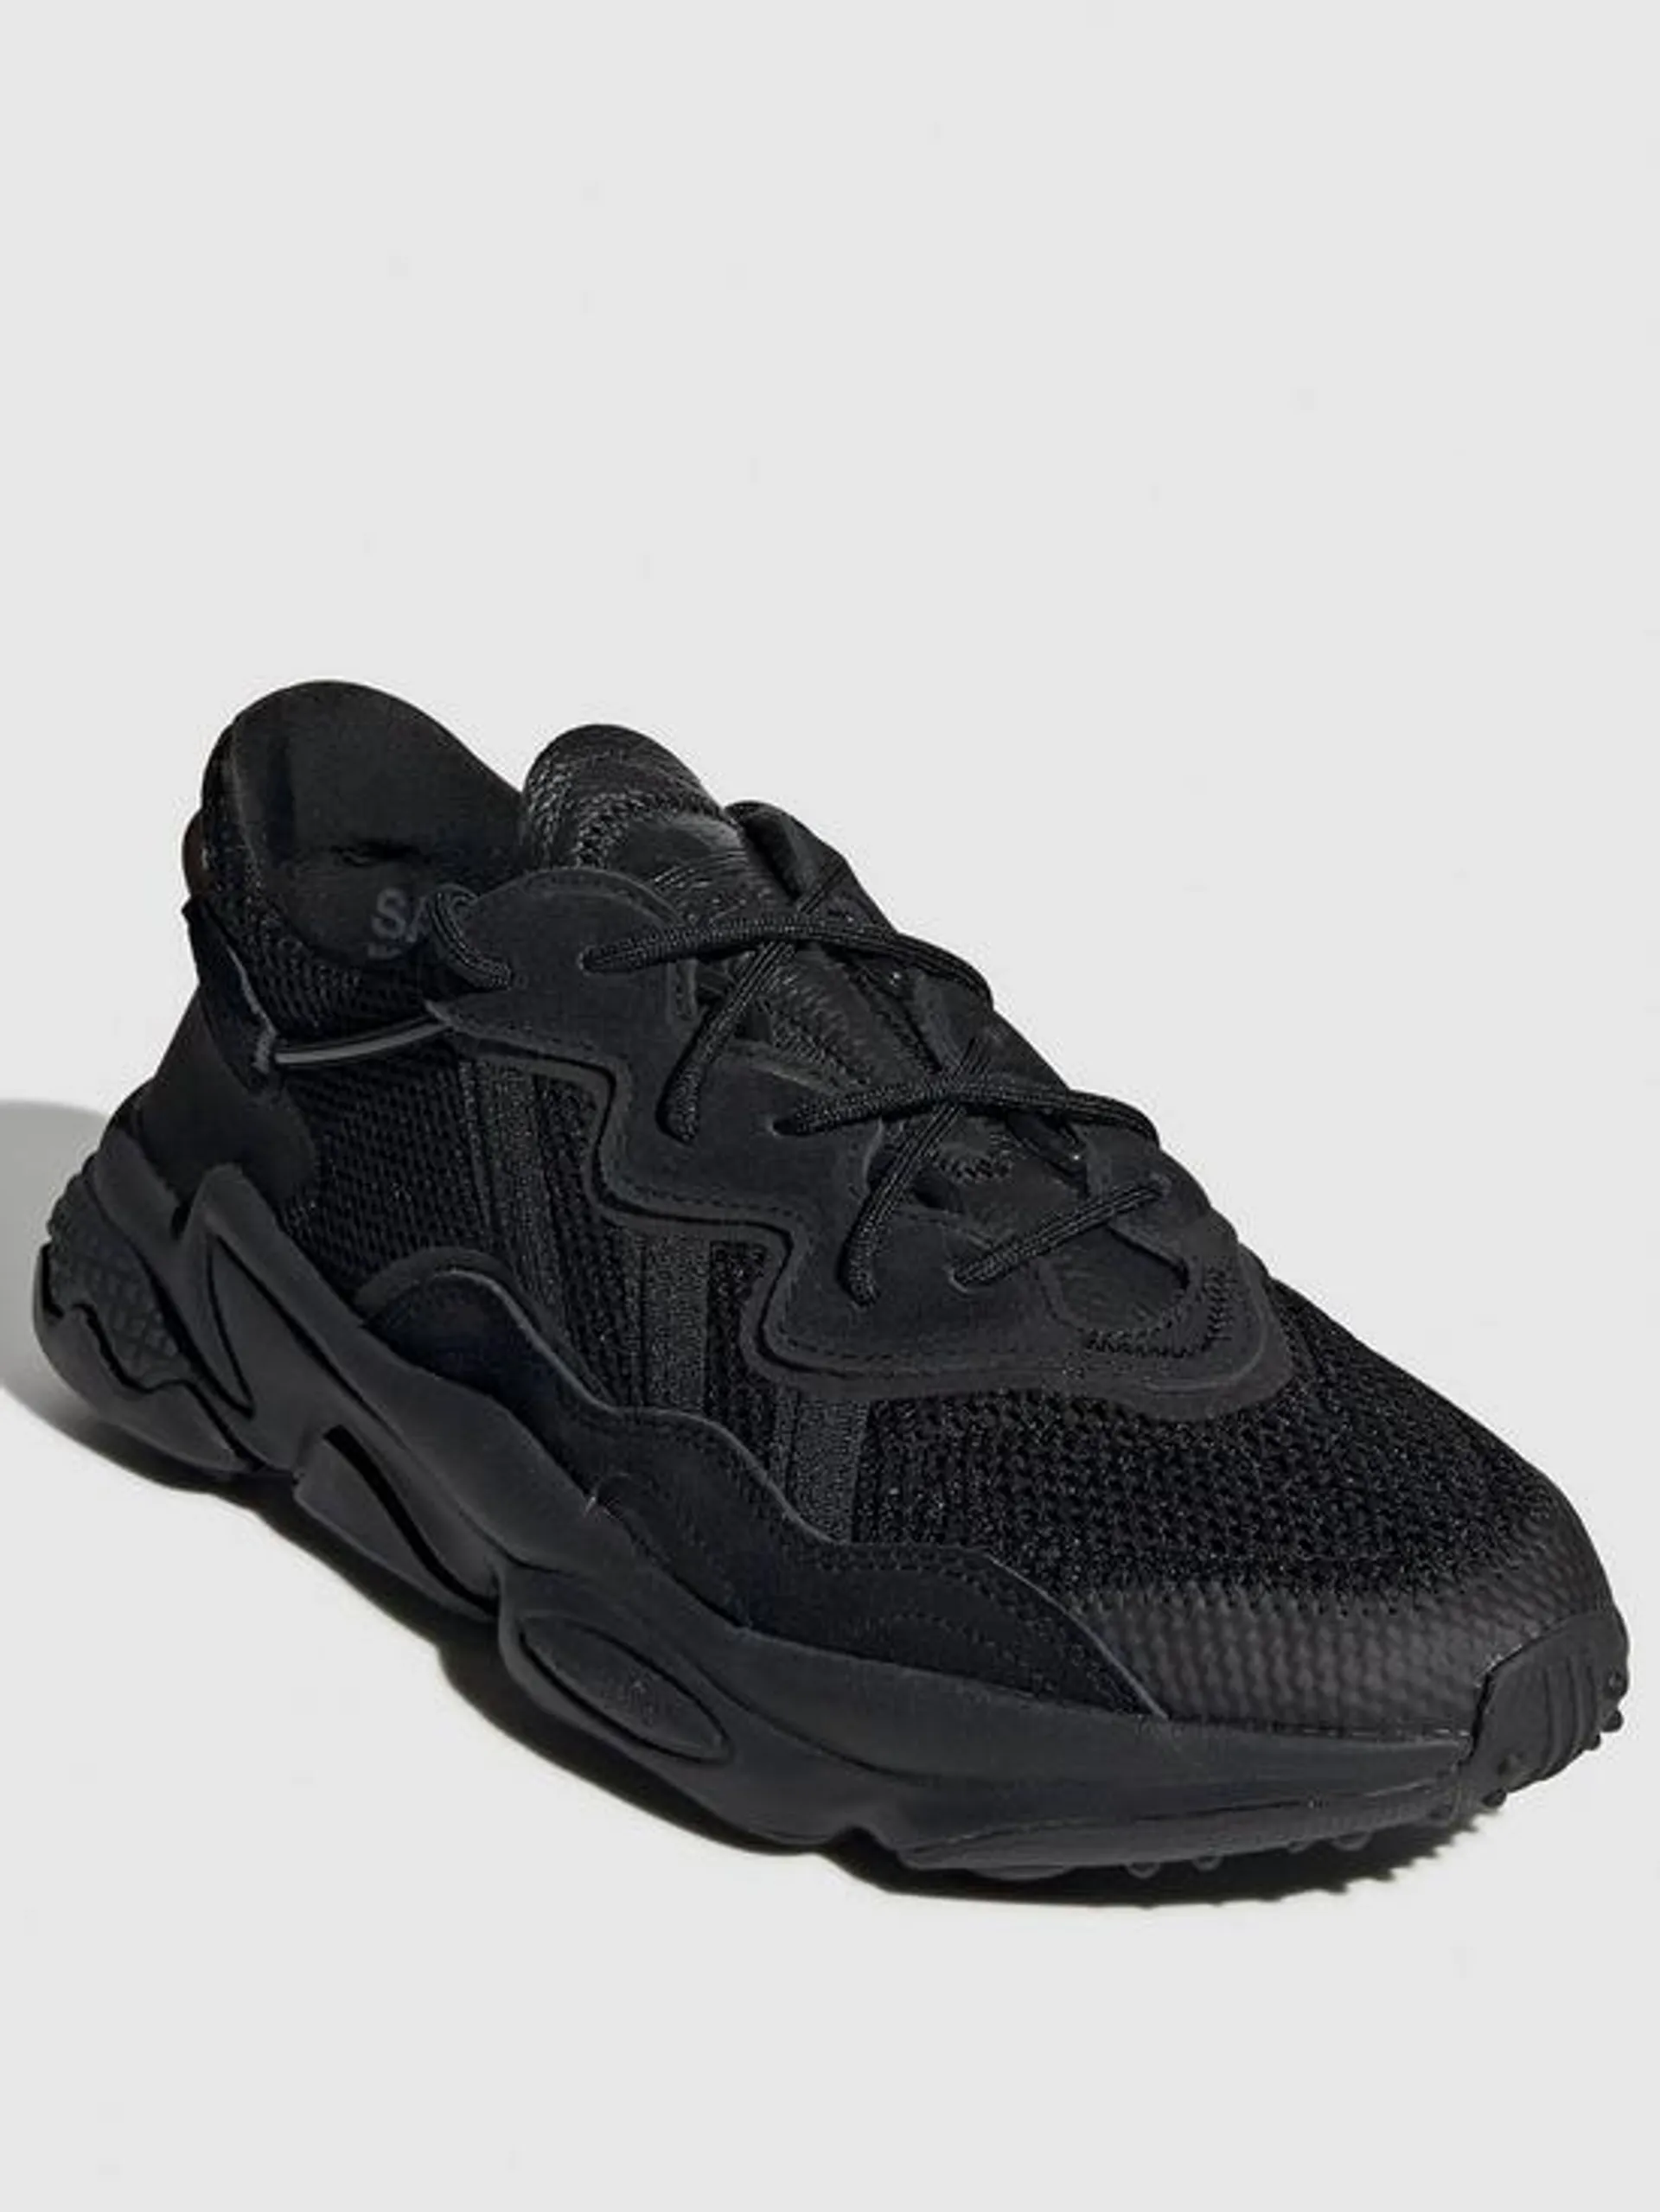 Ozweego Shoes - Black/Black, Black/Black, Size 3, Women